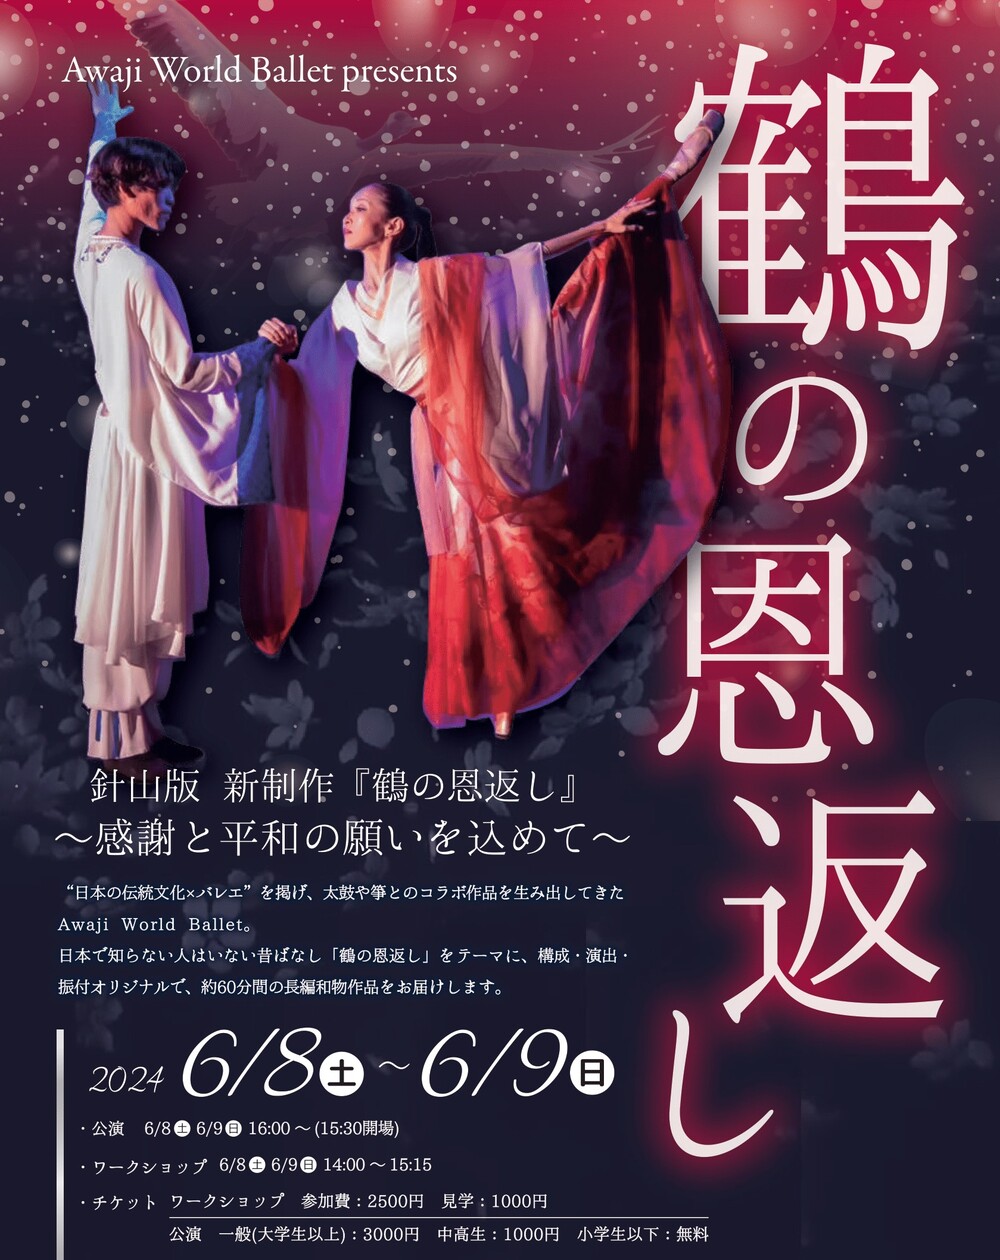 Awaji World Ballet 針山版 新制作「鶴の恩返し～感謝と平和の願いを込めて～」【Awaji World Ballet】 |  旧アソンブレホール